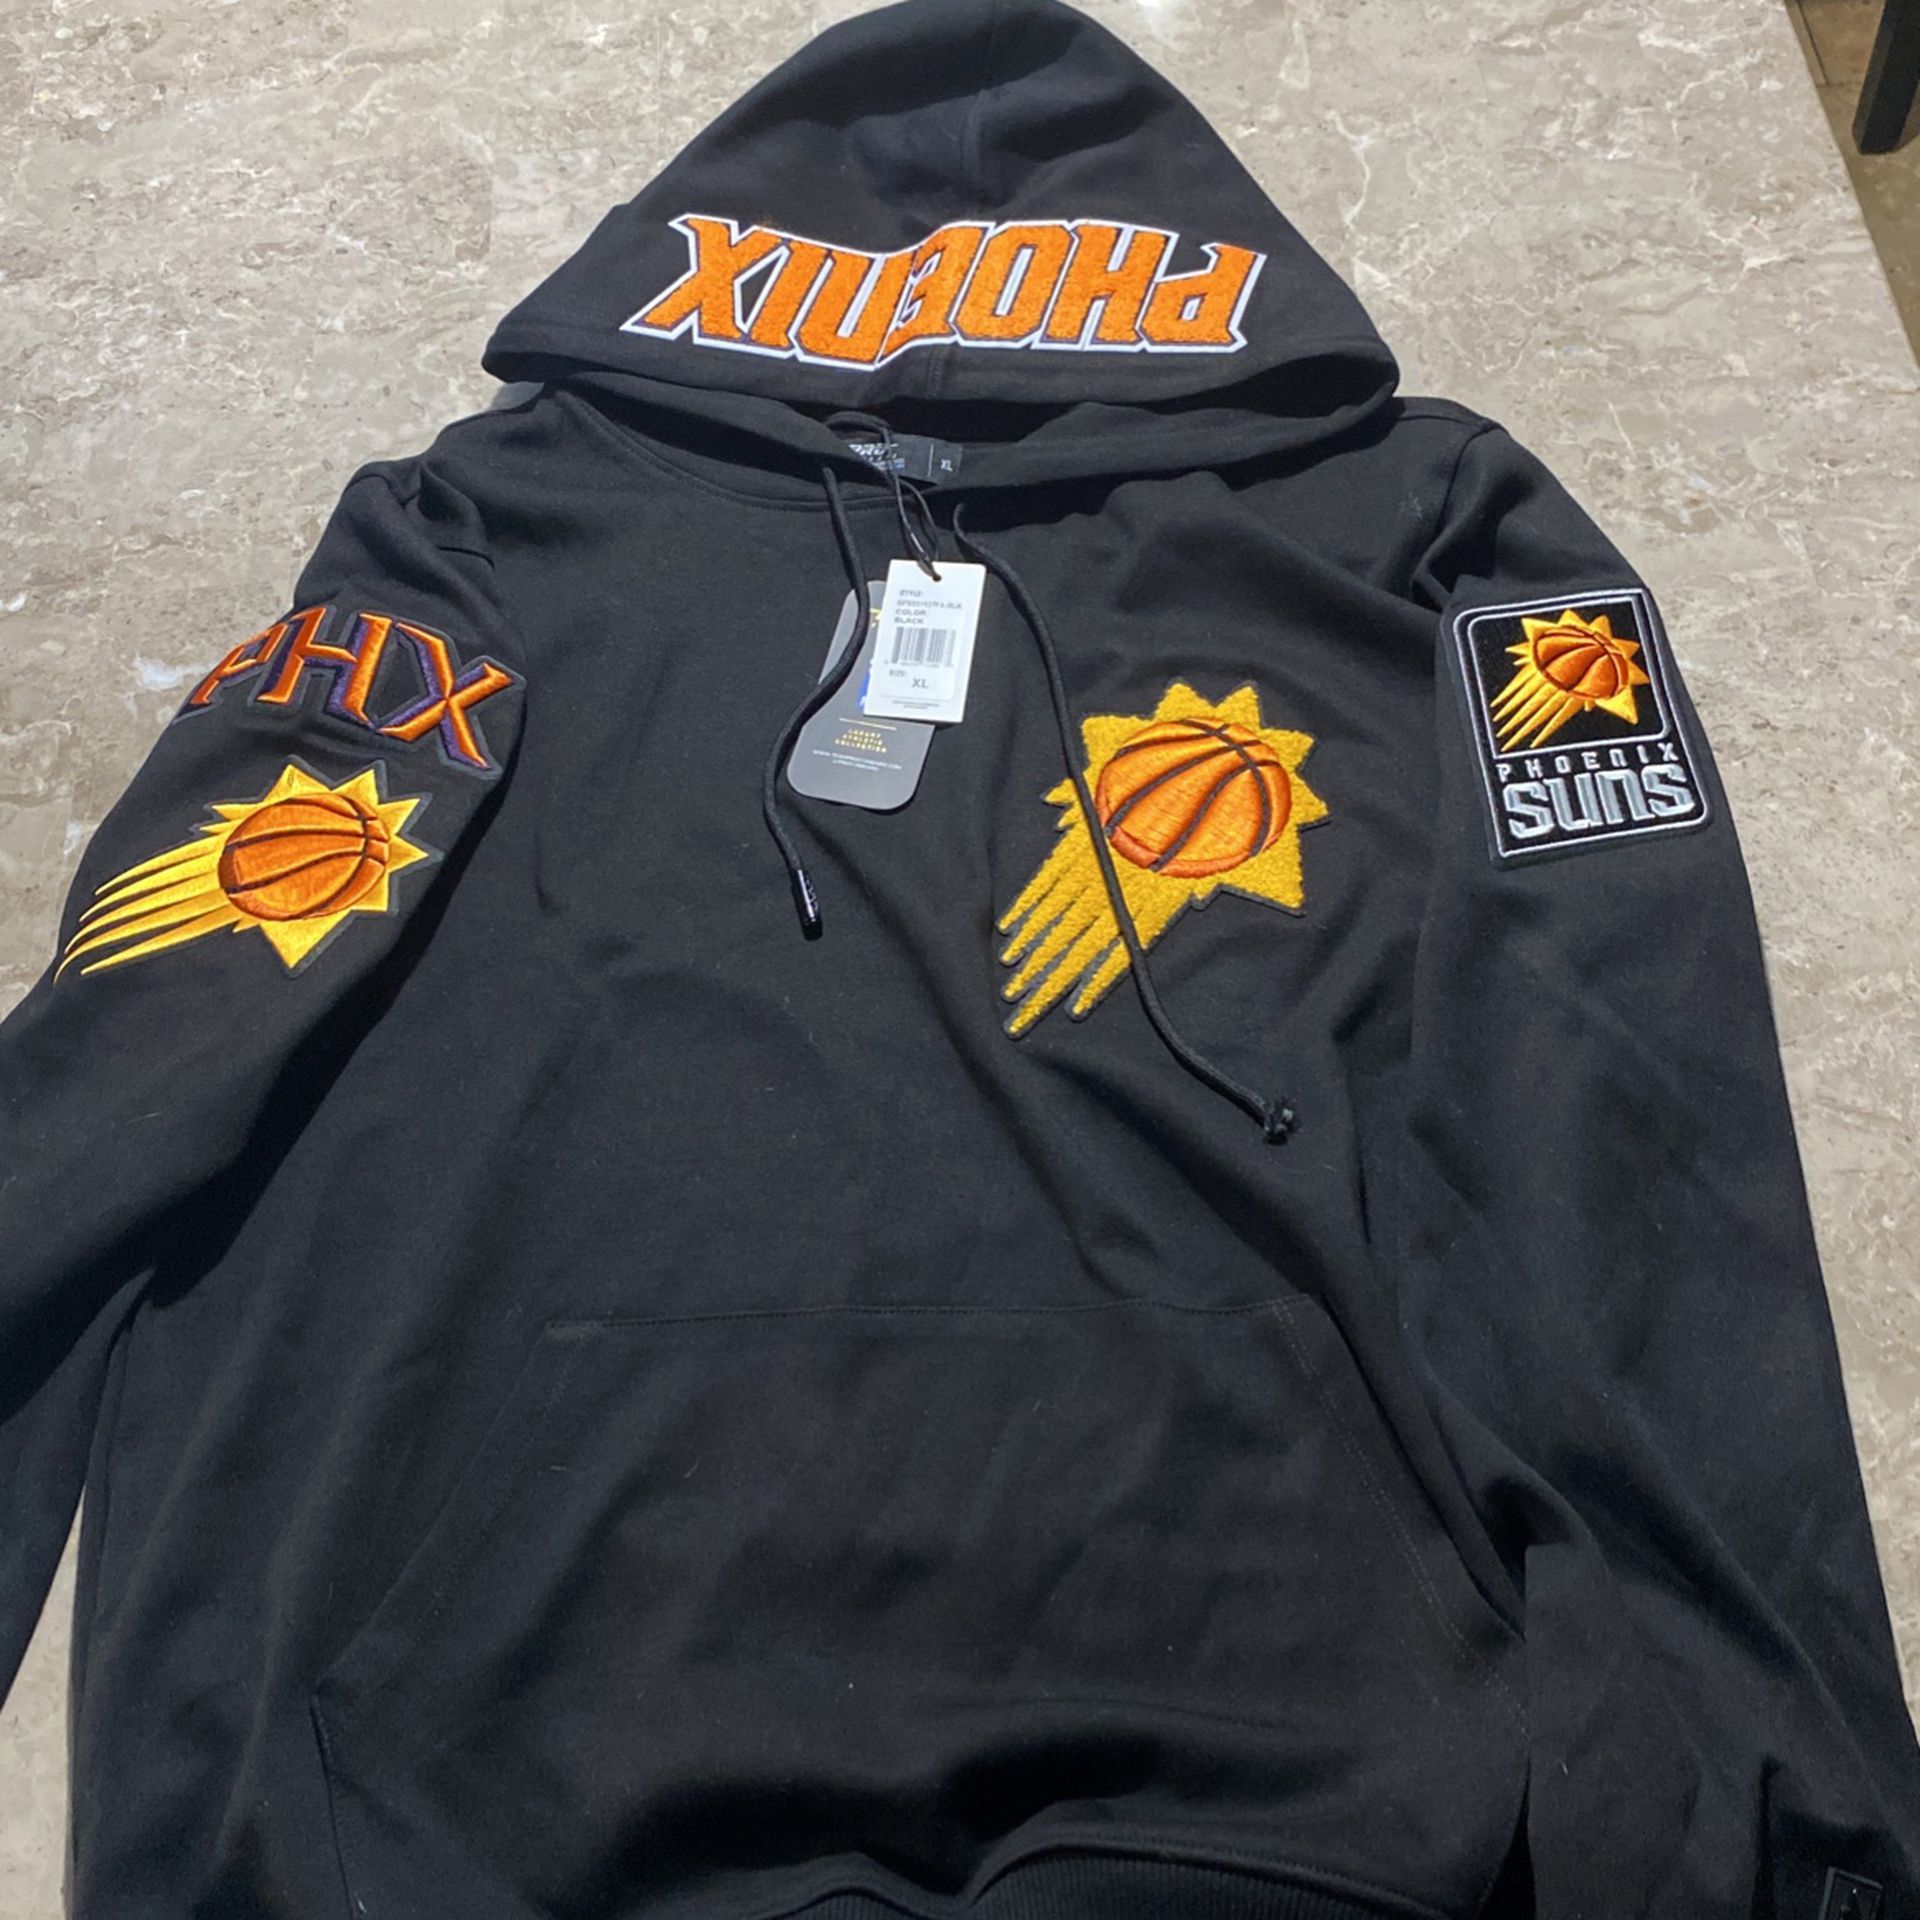 Phoenix Suns NBA Finals Champion 1993 Shirt for Sale in Laveen Village, AZ  - OfferUp